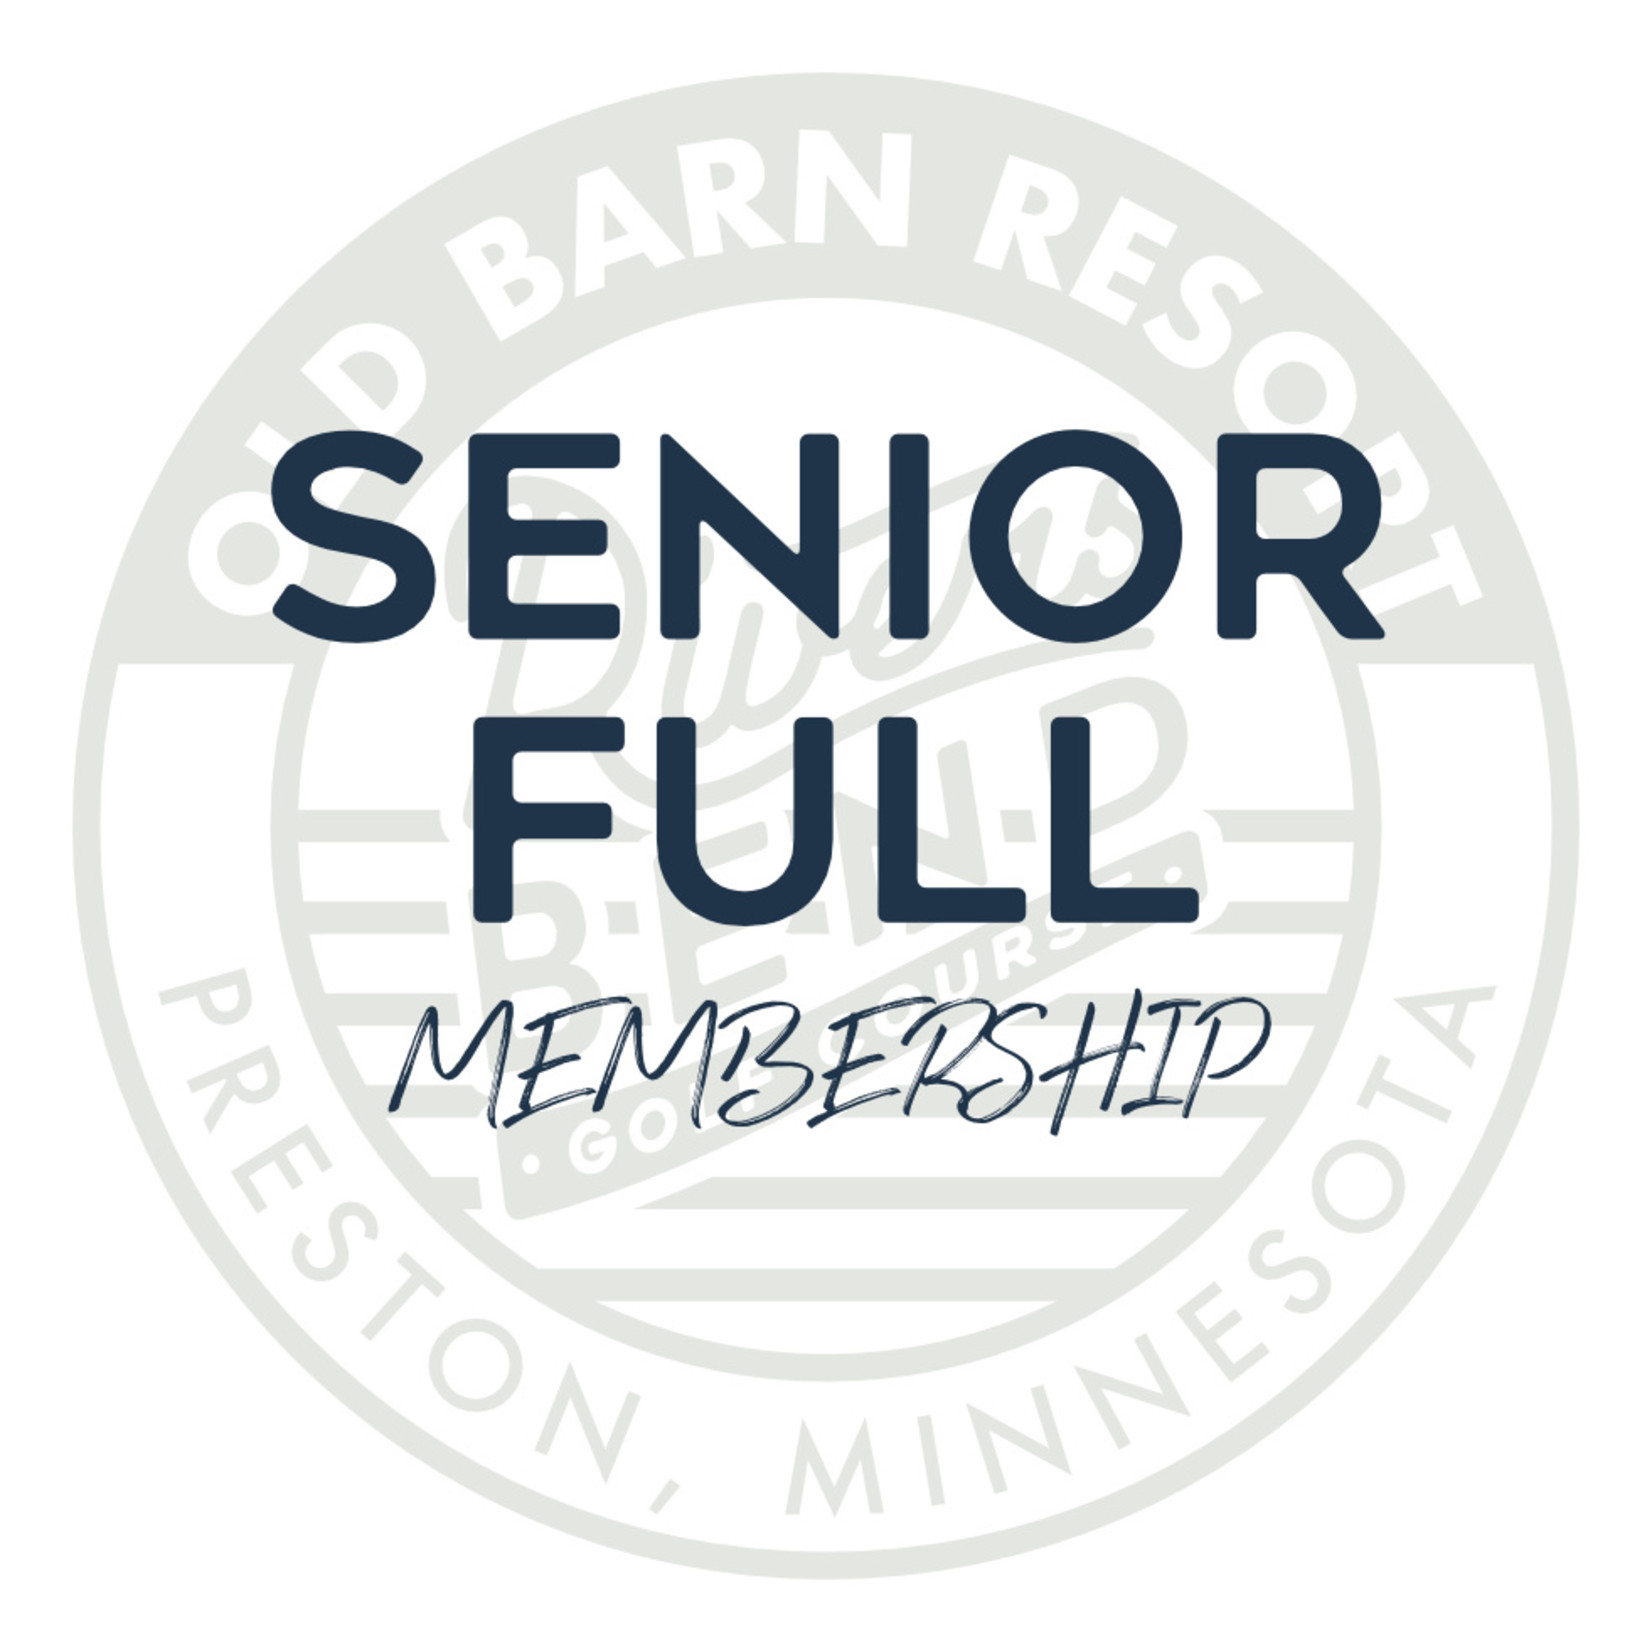 Senior Full Membership - Full Member